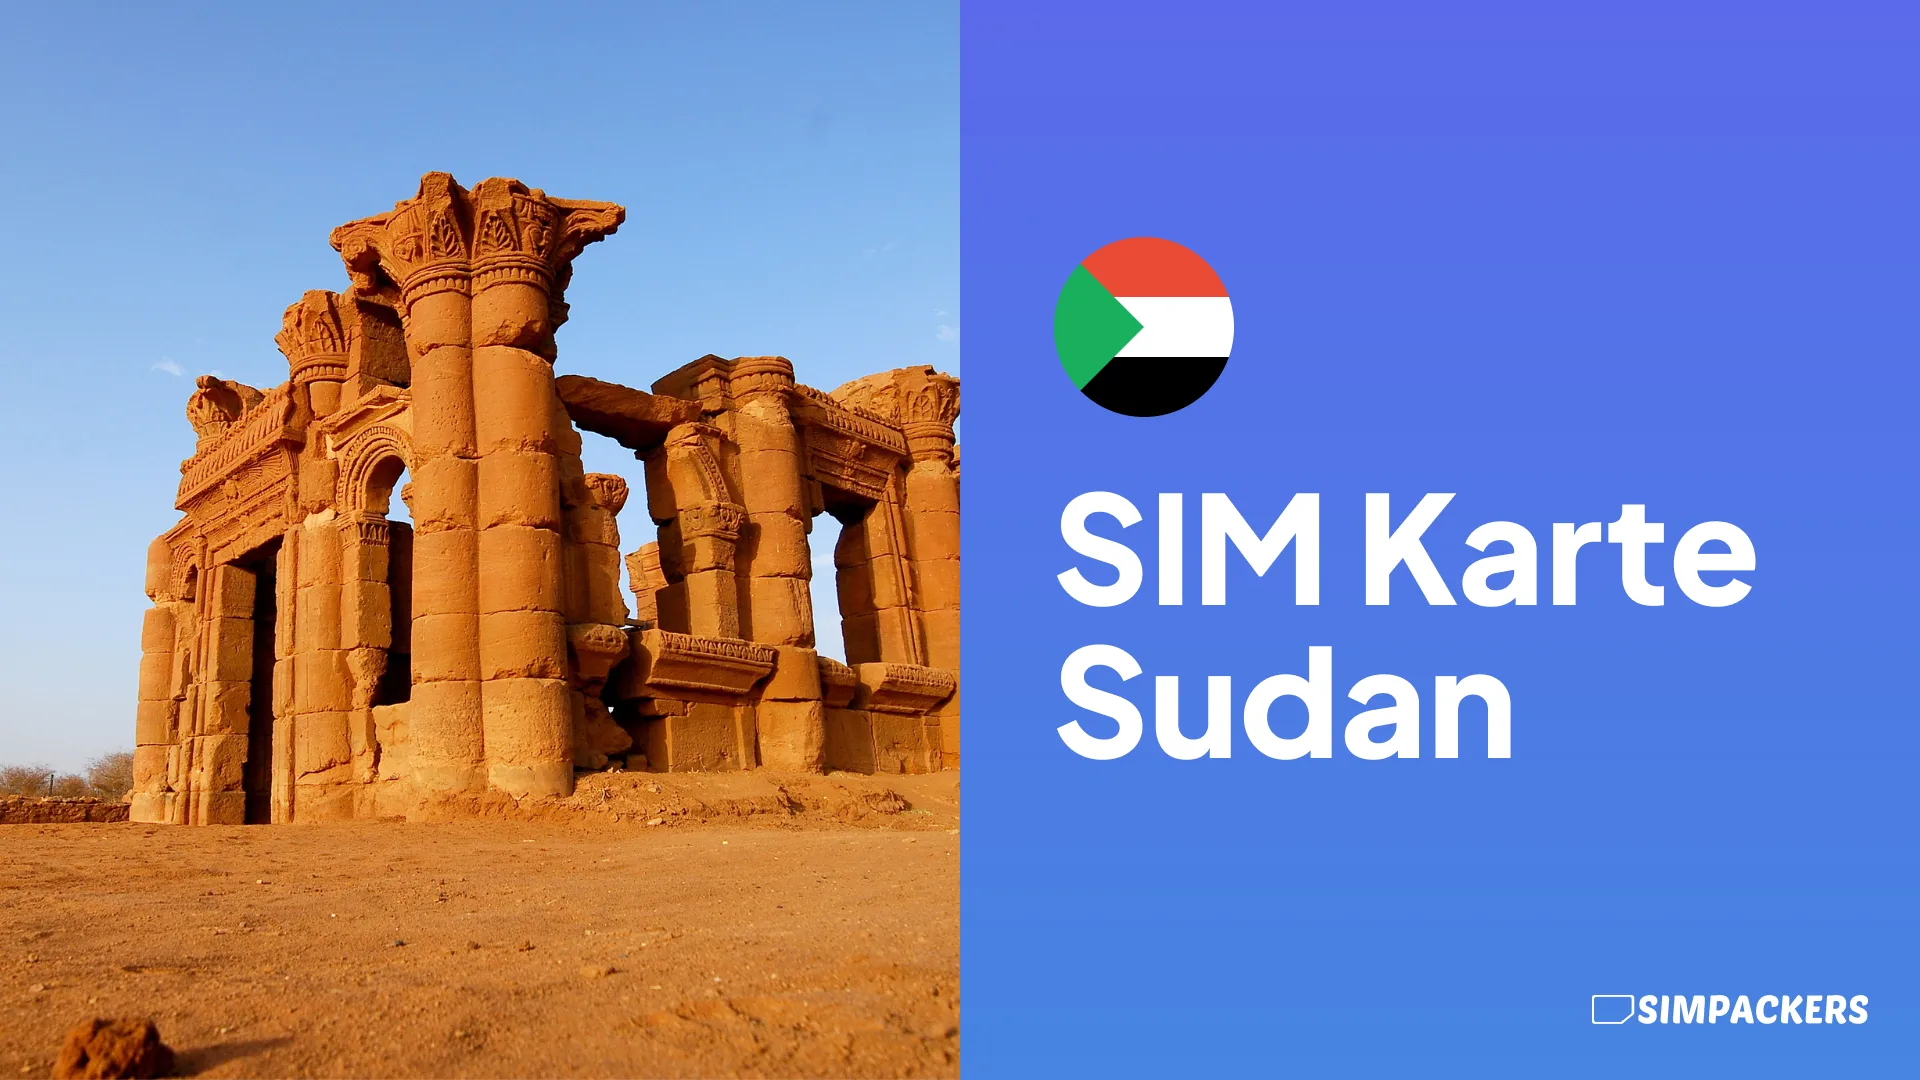 DE/FEATURED_IMAGES/sim-karte-sudan.webp